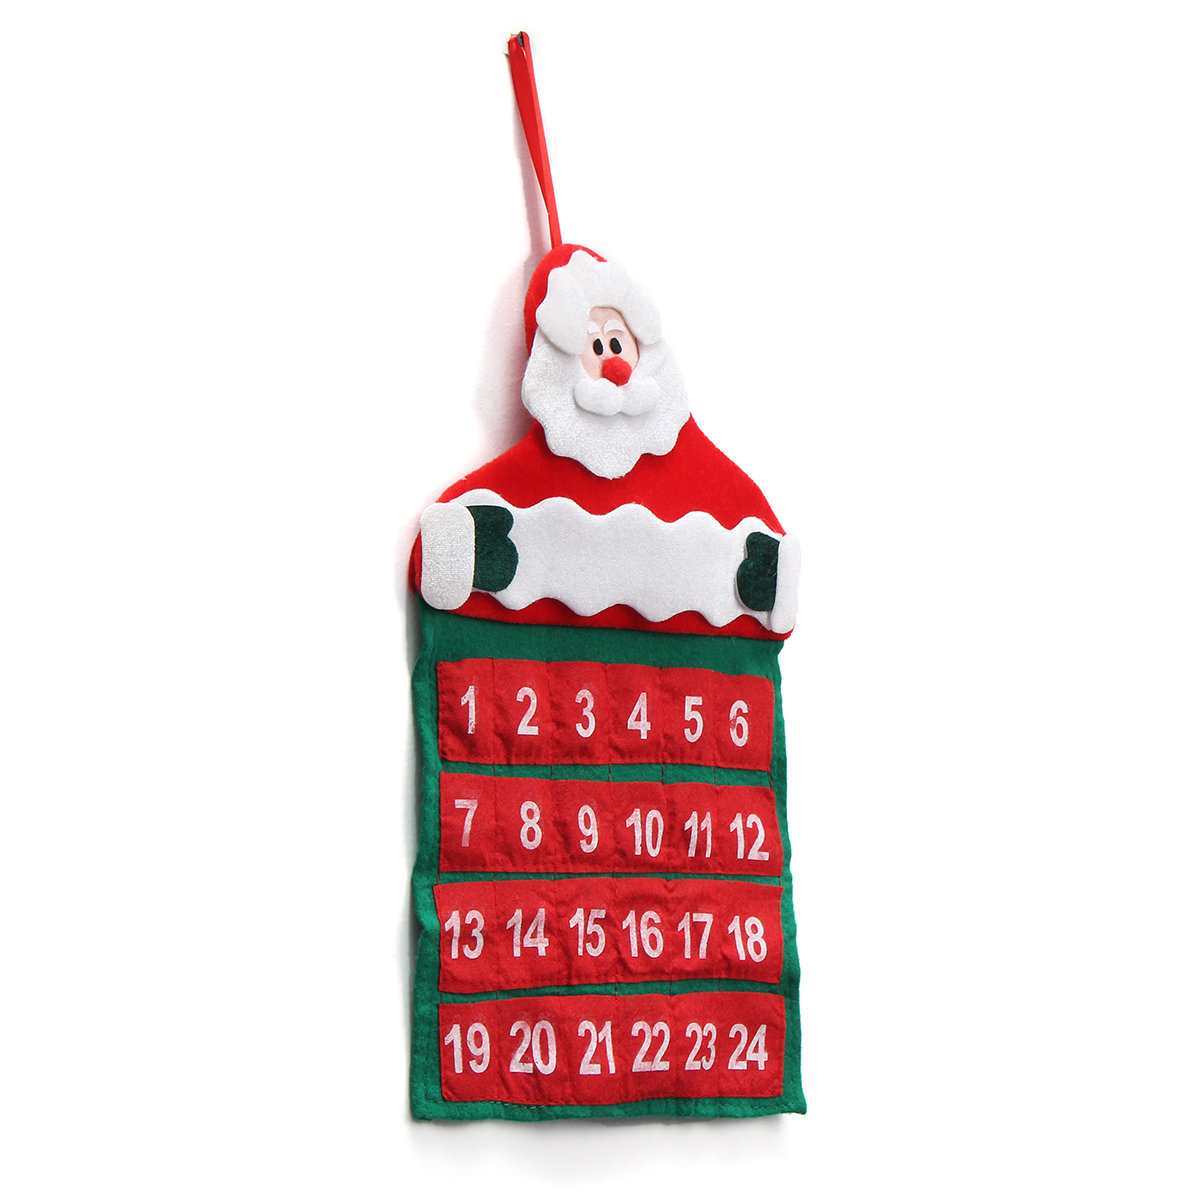 Felt-Christmas-Advent-Wall-Hanging-Calendar-Pockets-Santa-Reindeer-Snowman-Decorations-1462546-3